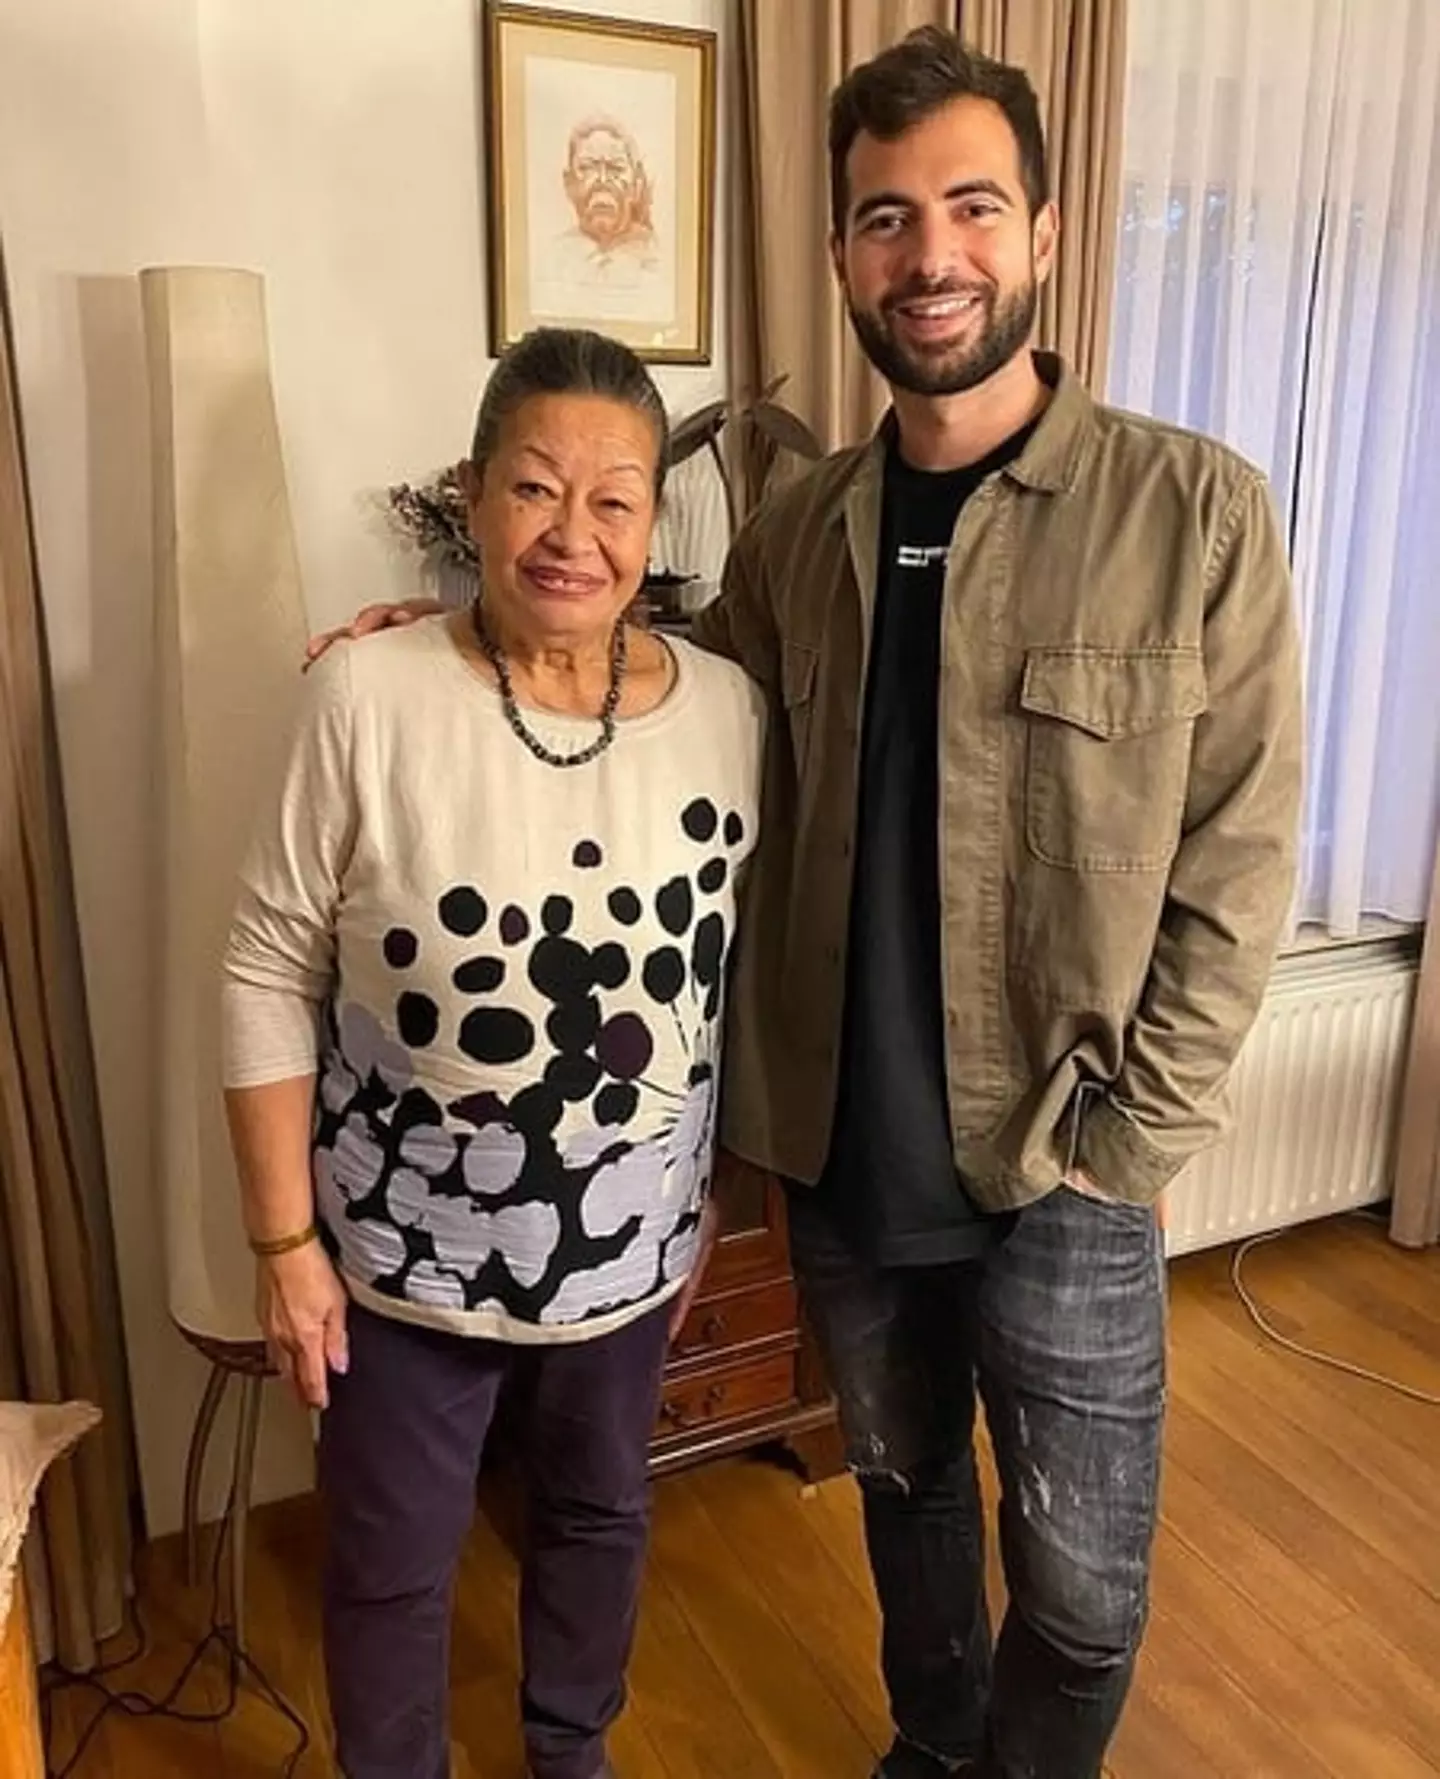 Jordi with his grandmother, Isje. Image credit: Instagram/jordiamat5